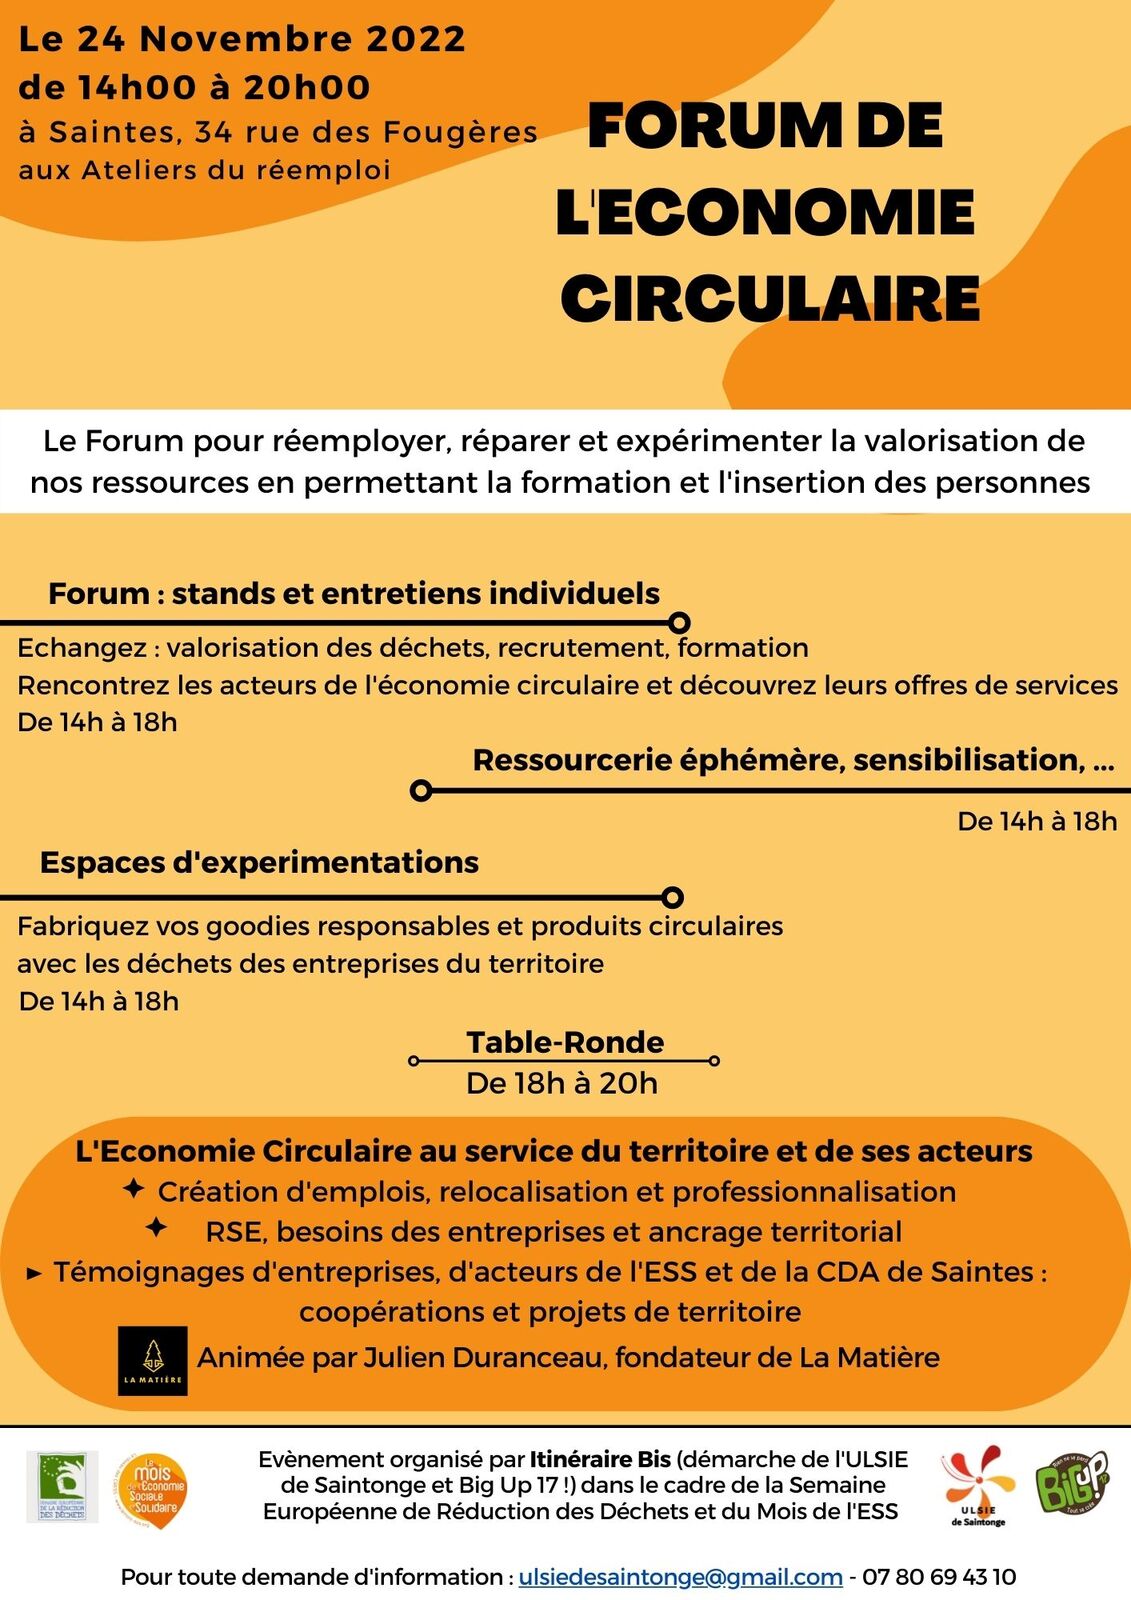 Forum de l'Economie Circulaire en Saintonge